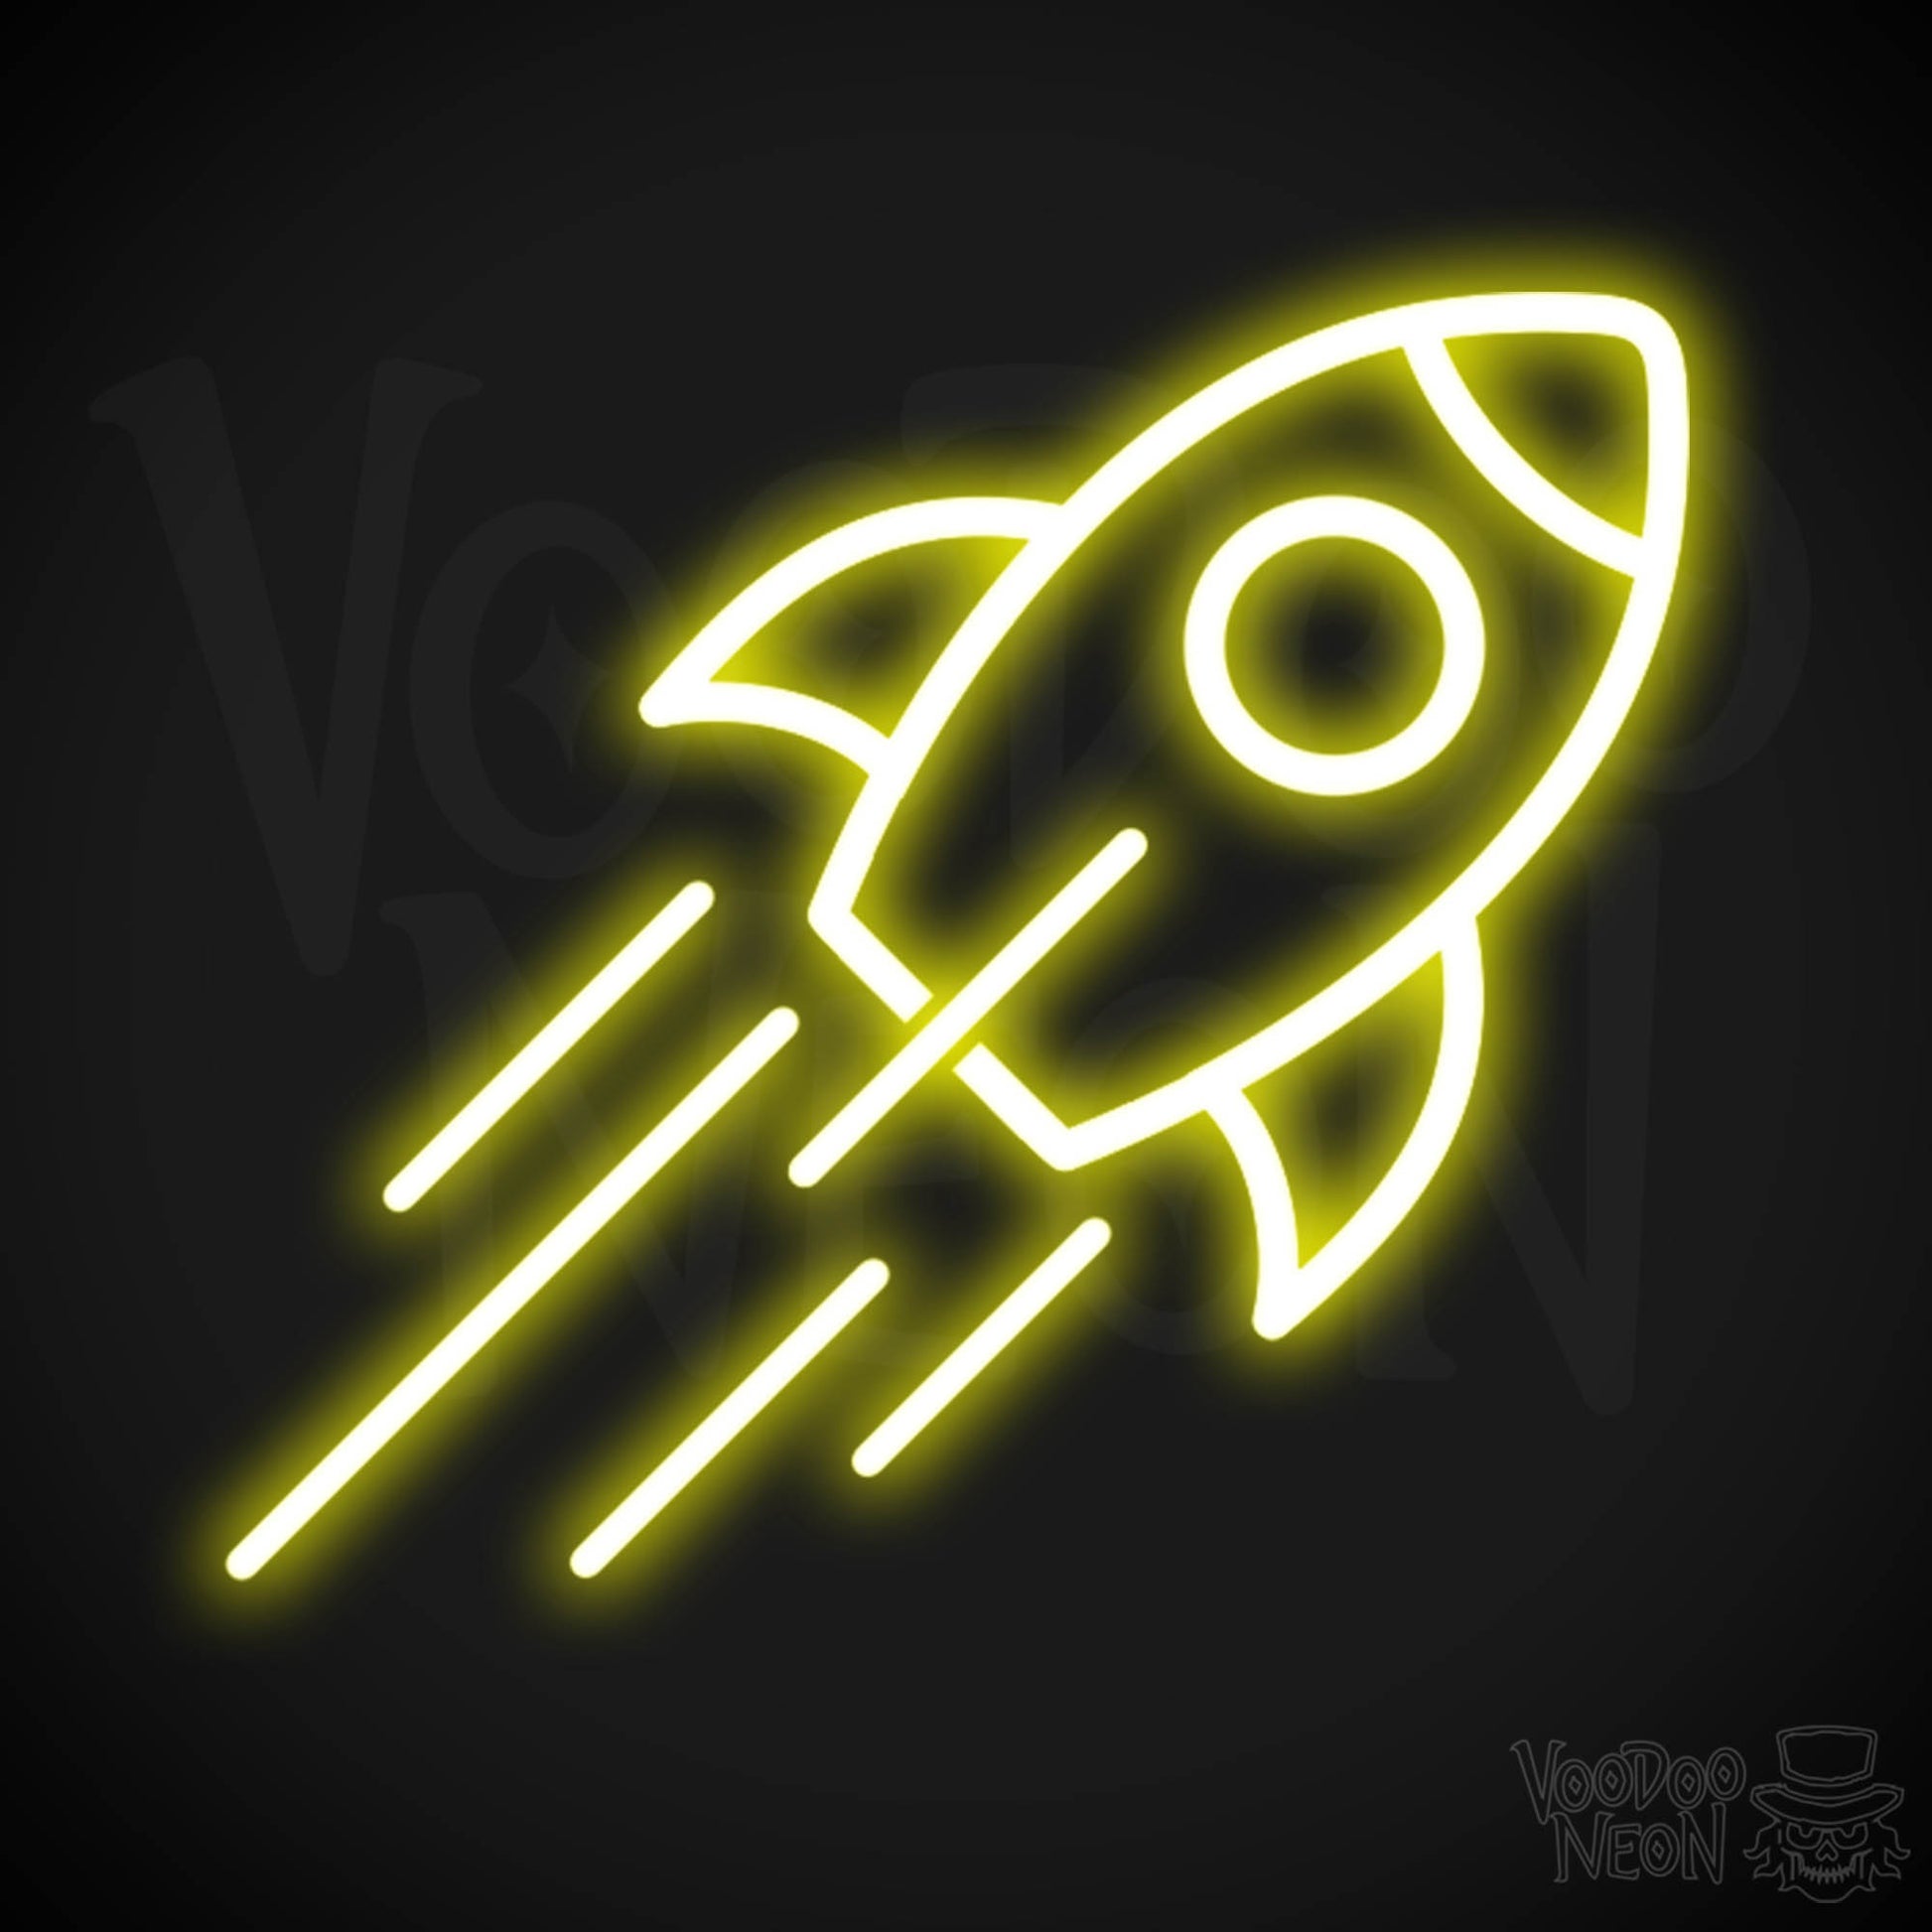 Neon Rocket - Rocket Neon Sign - Rocket Ship Neon Wall Art - Color Yellow